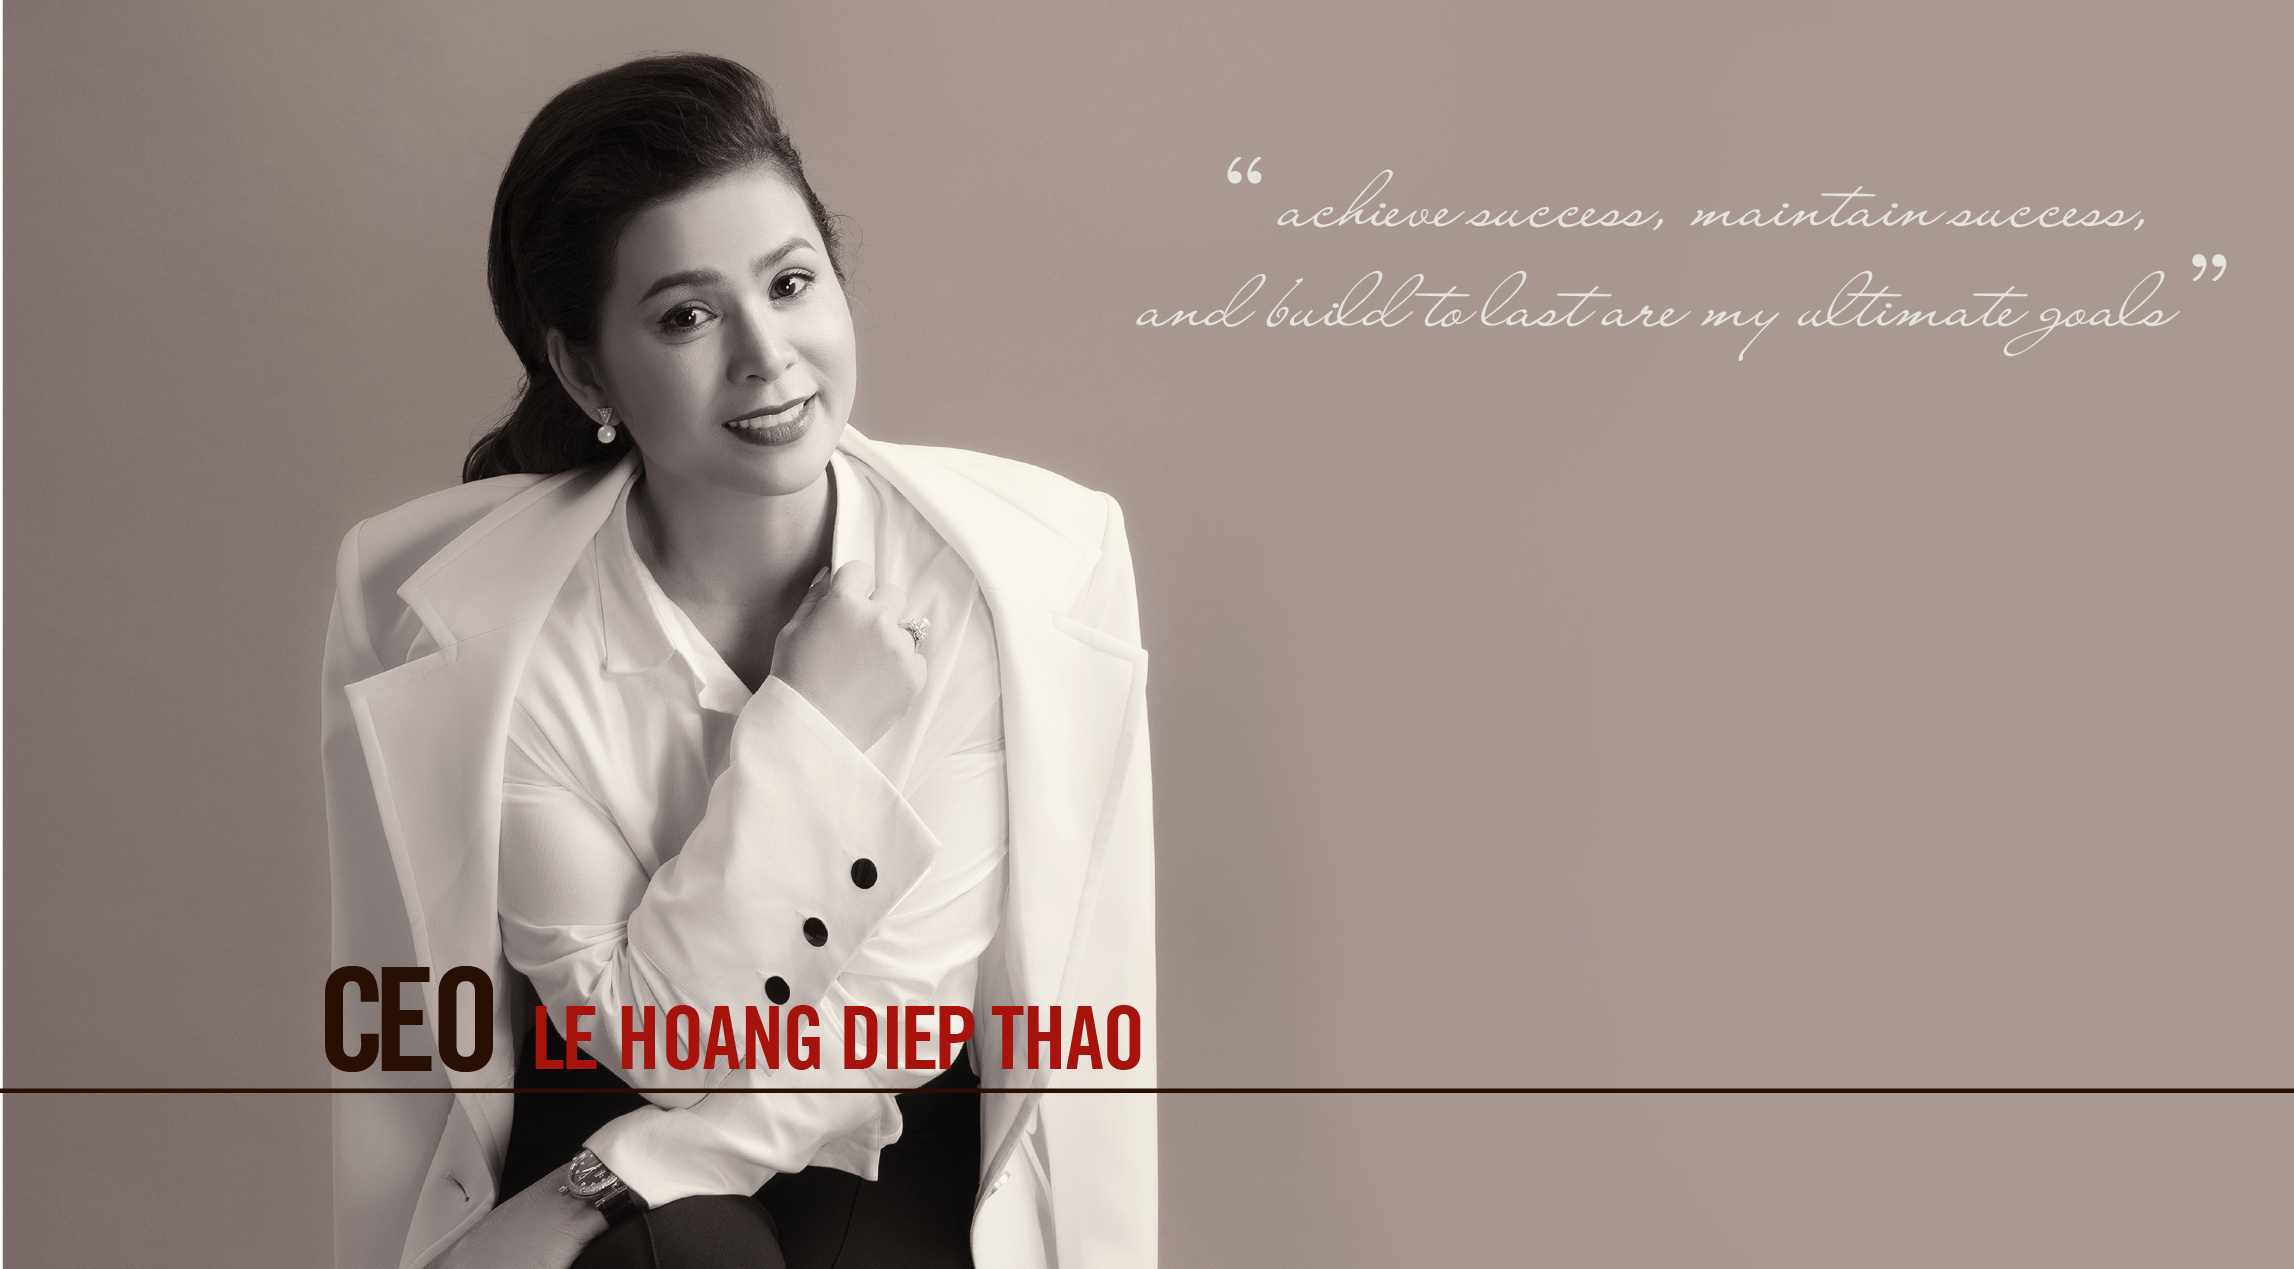 Meet the woman behind Vietnam's finest coffee: Le Hoang Diep Thao